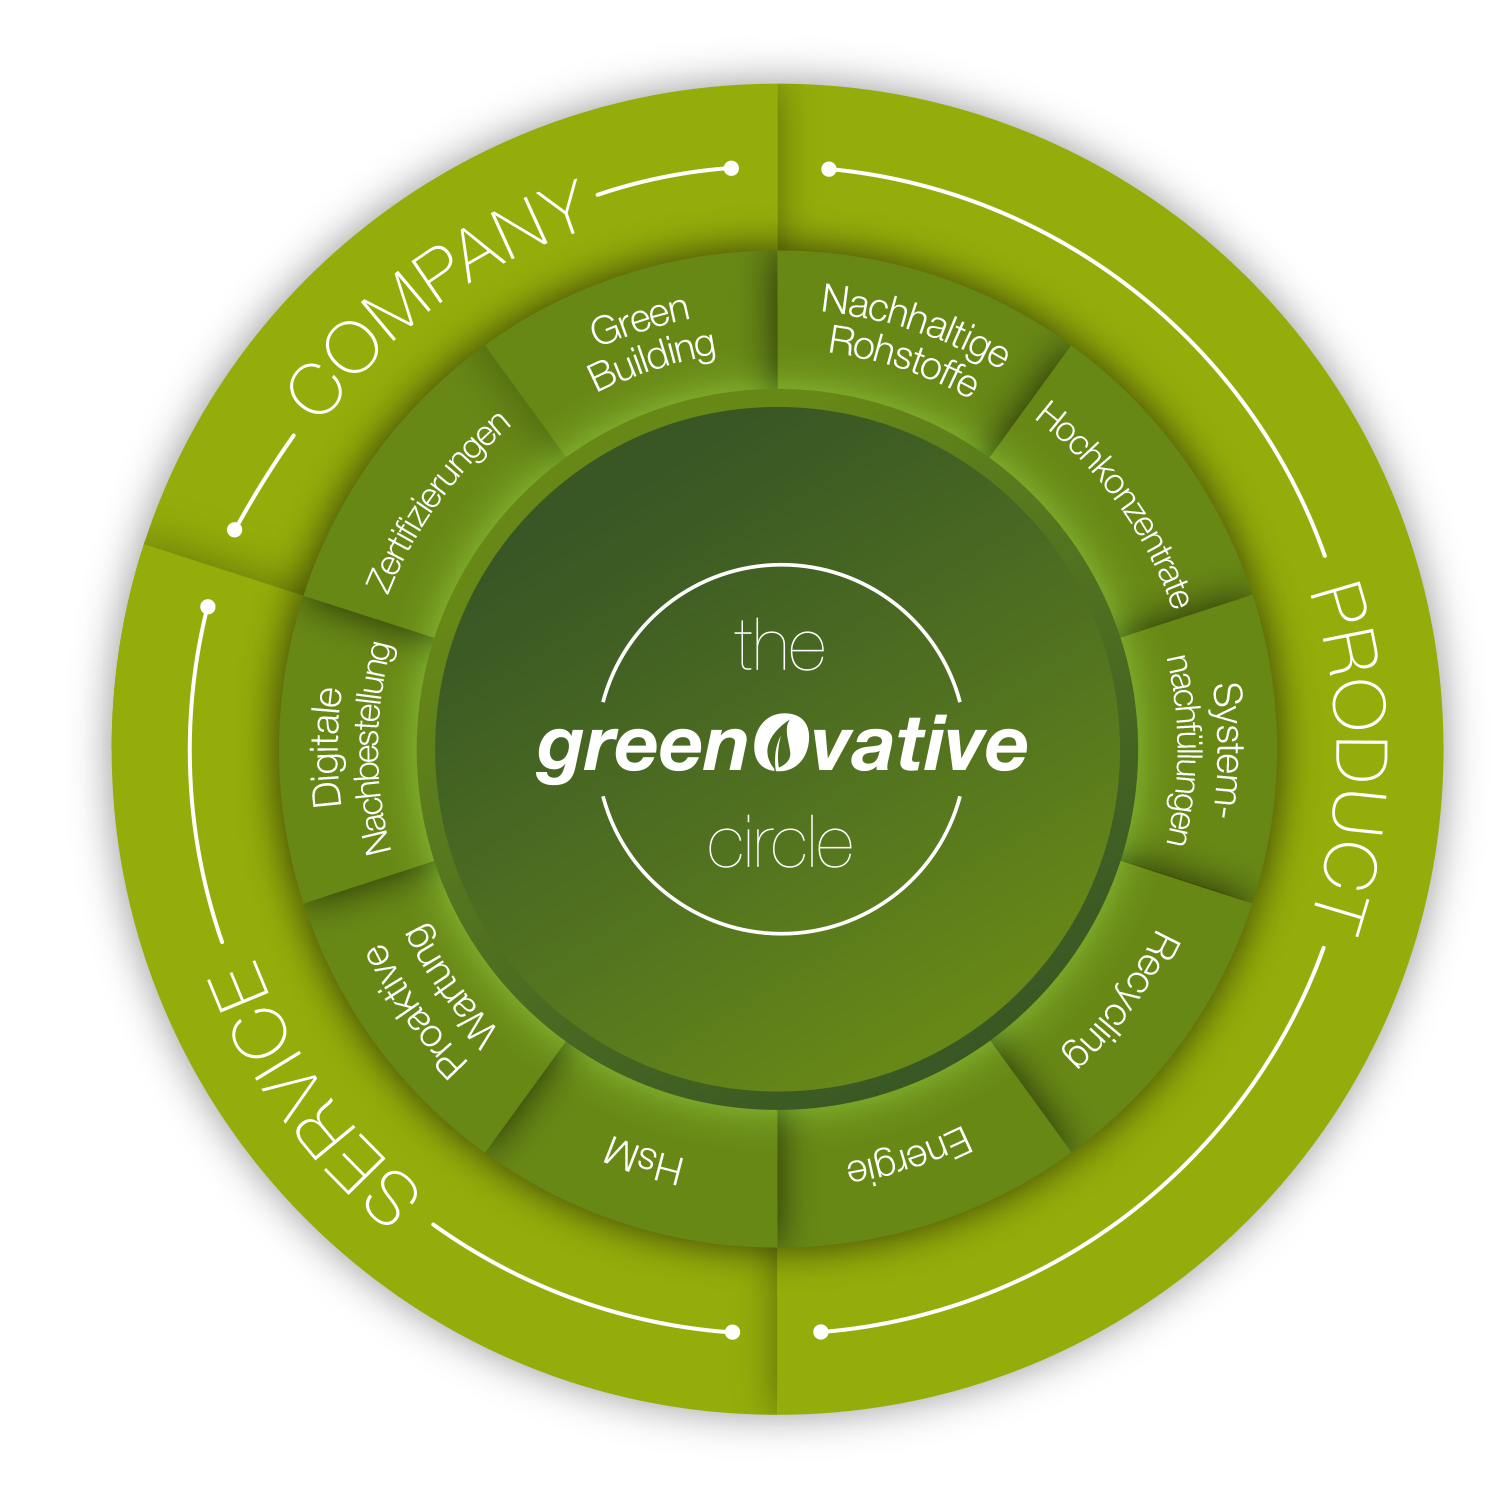 Greenovative Circle